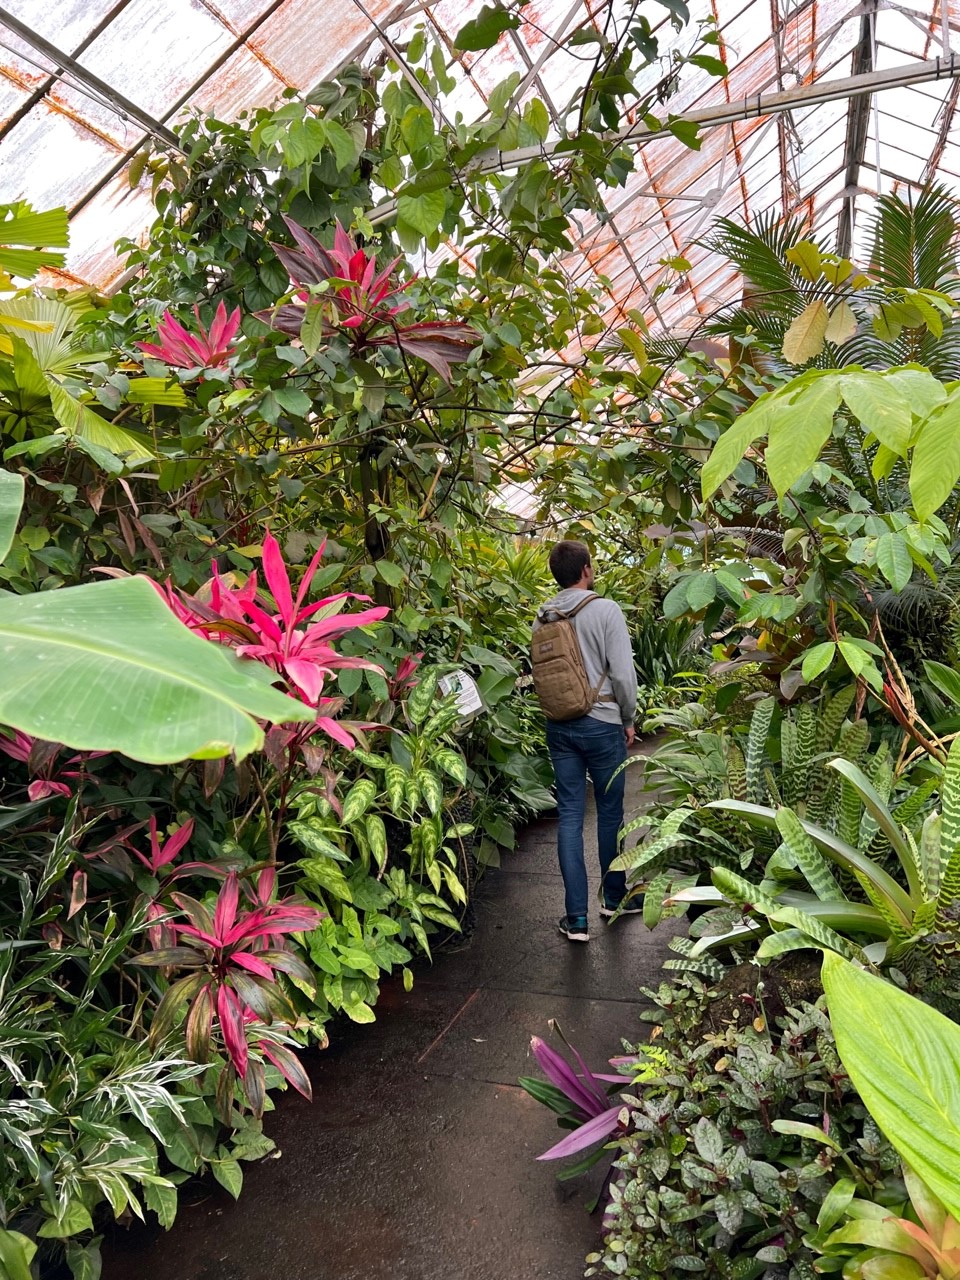 The Botanical Gardens around Melbourne